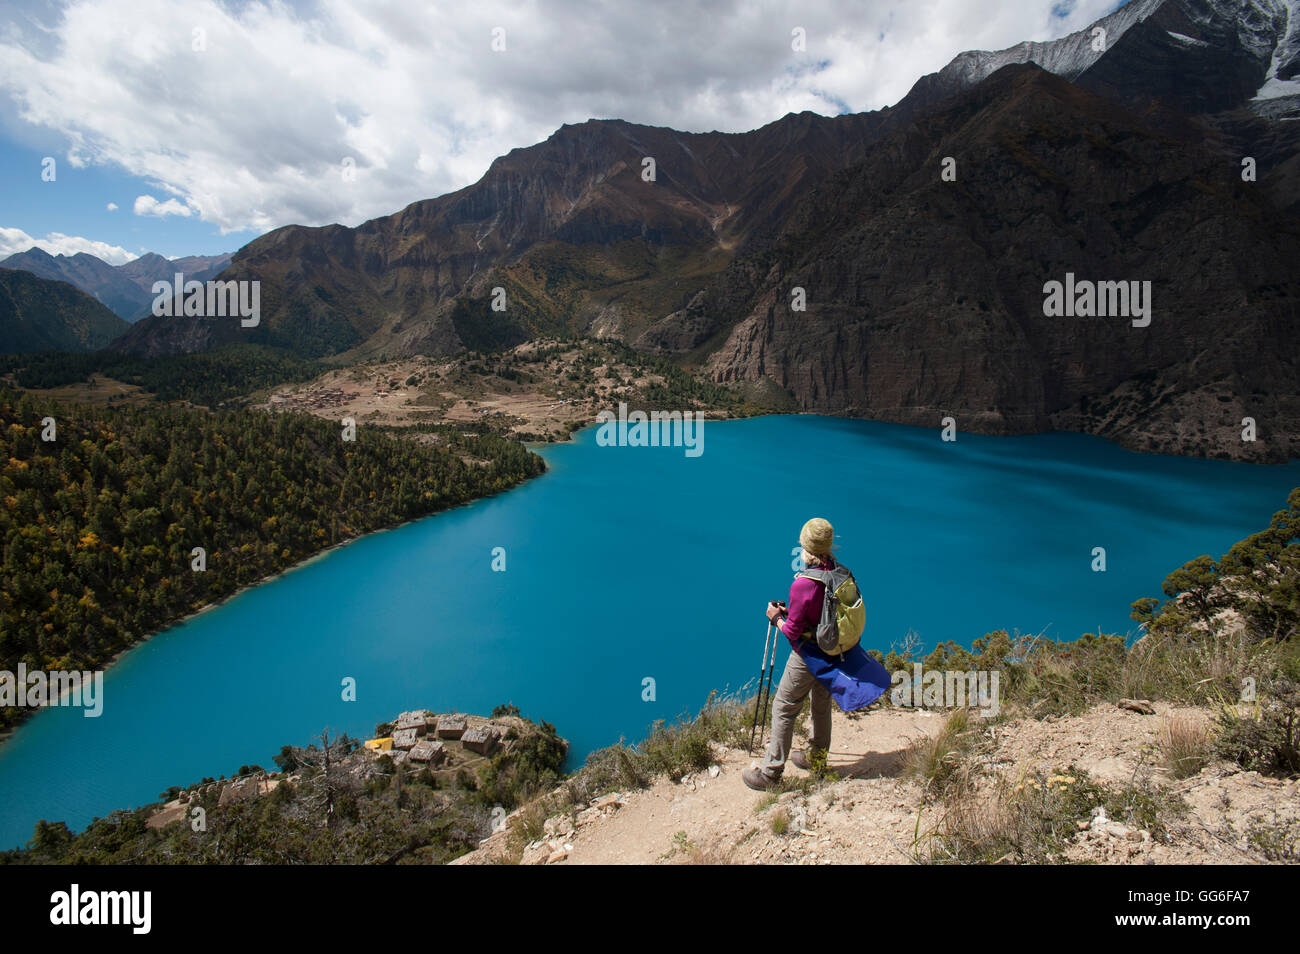 A trekker stands above the turquoise blue Phoksundo Lake in the Dolpa region, Himalayas, Nepal, Asia Stock Photo